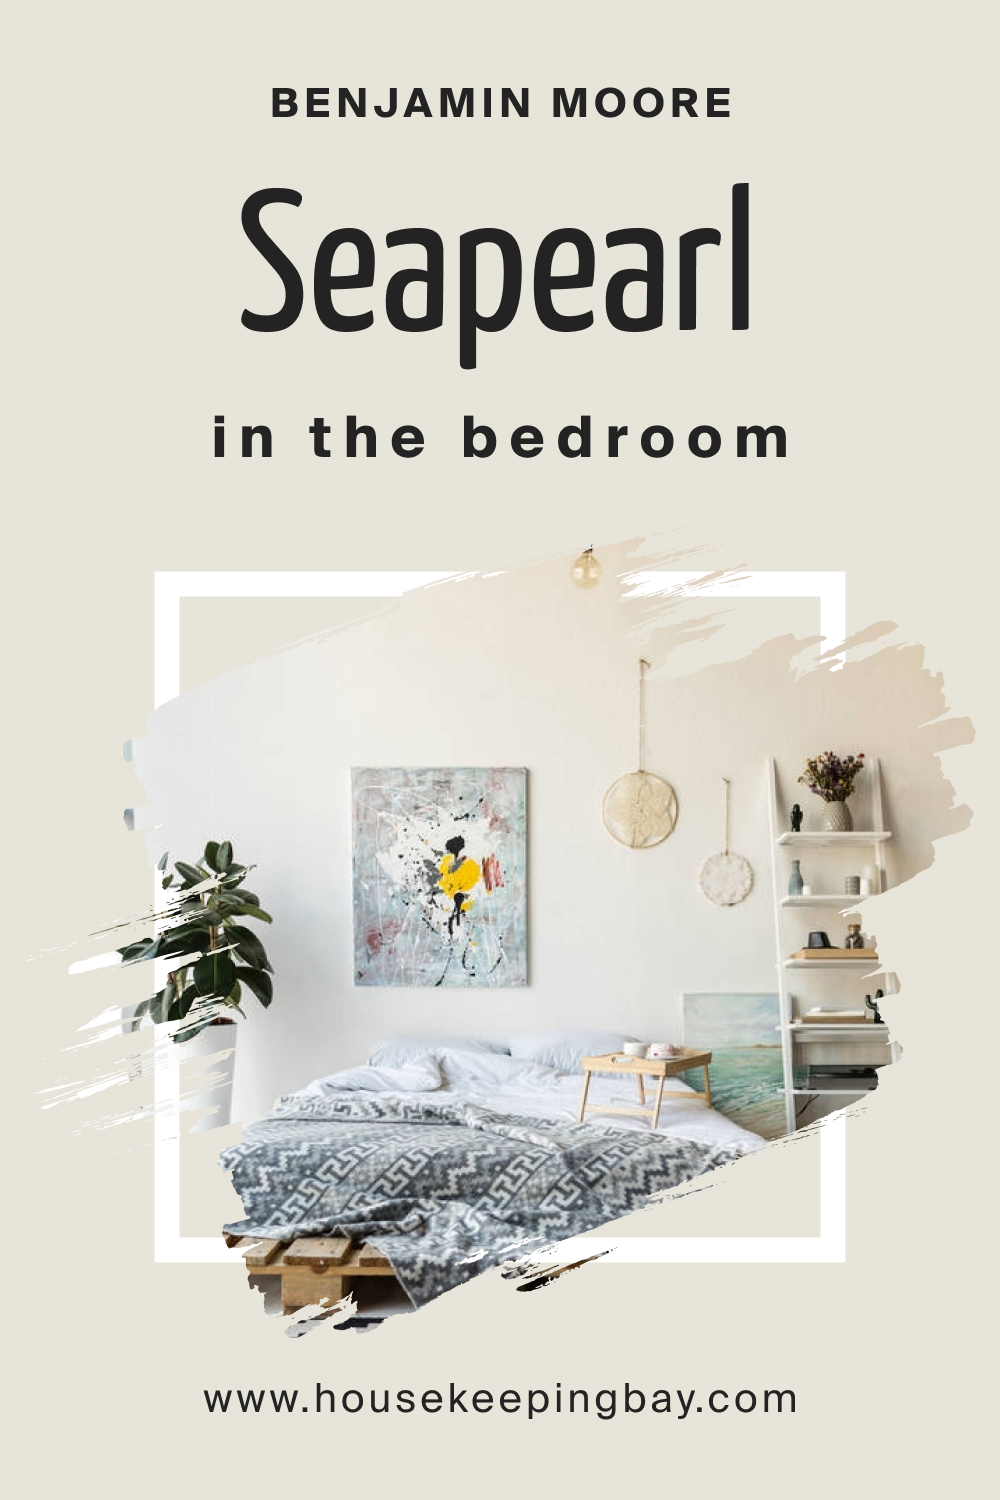 Benjamin Moore. Seapearl OC 19 for the Bedroom